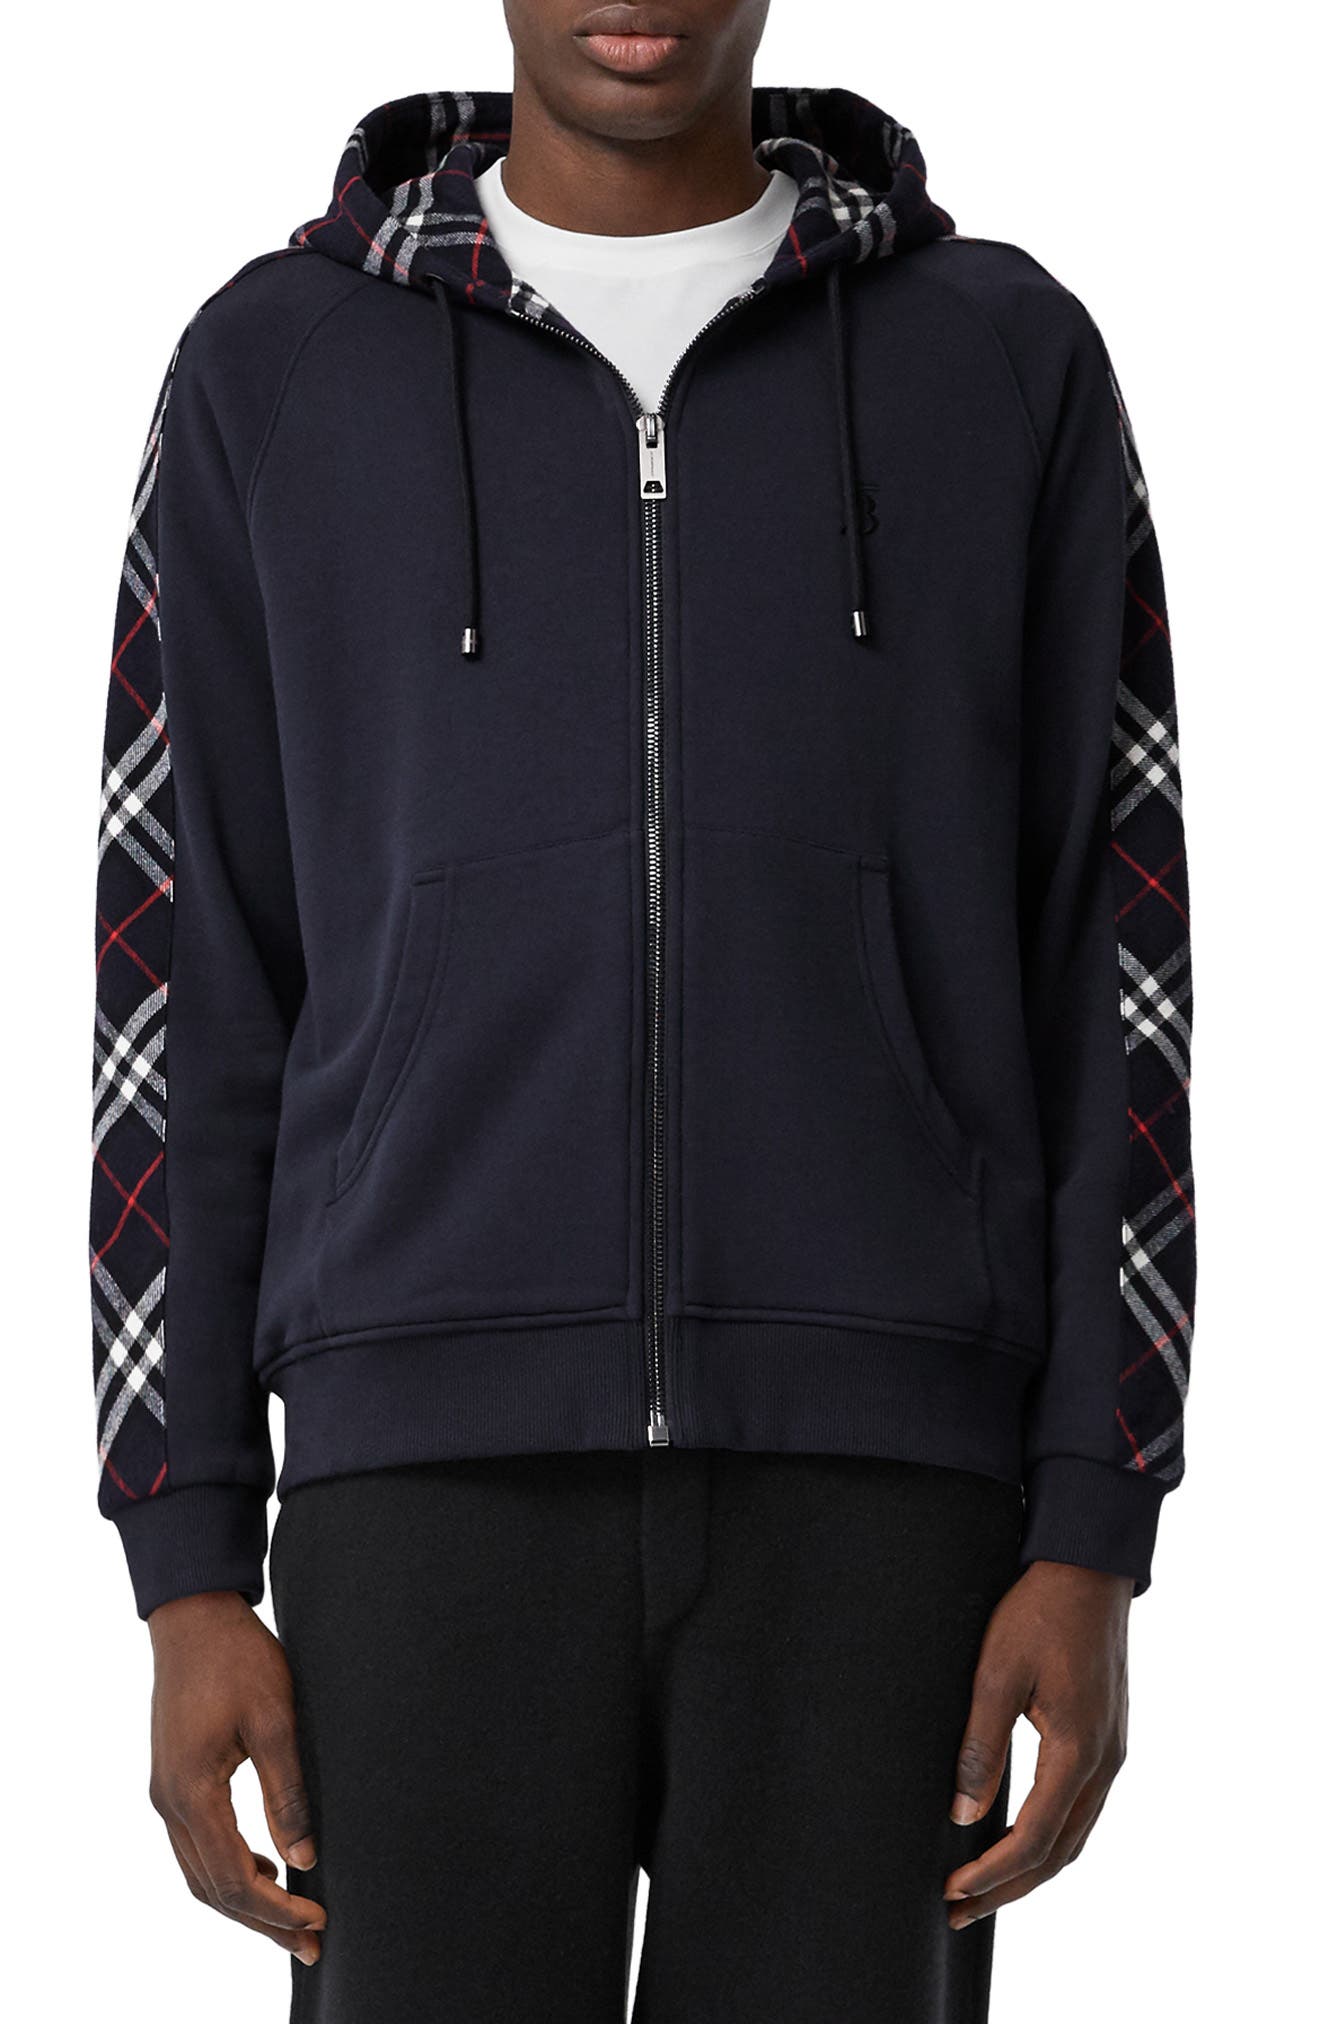 burberry hoodie womens price